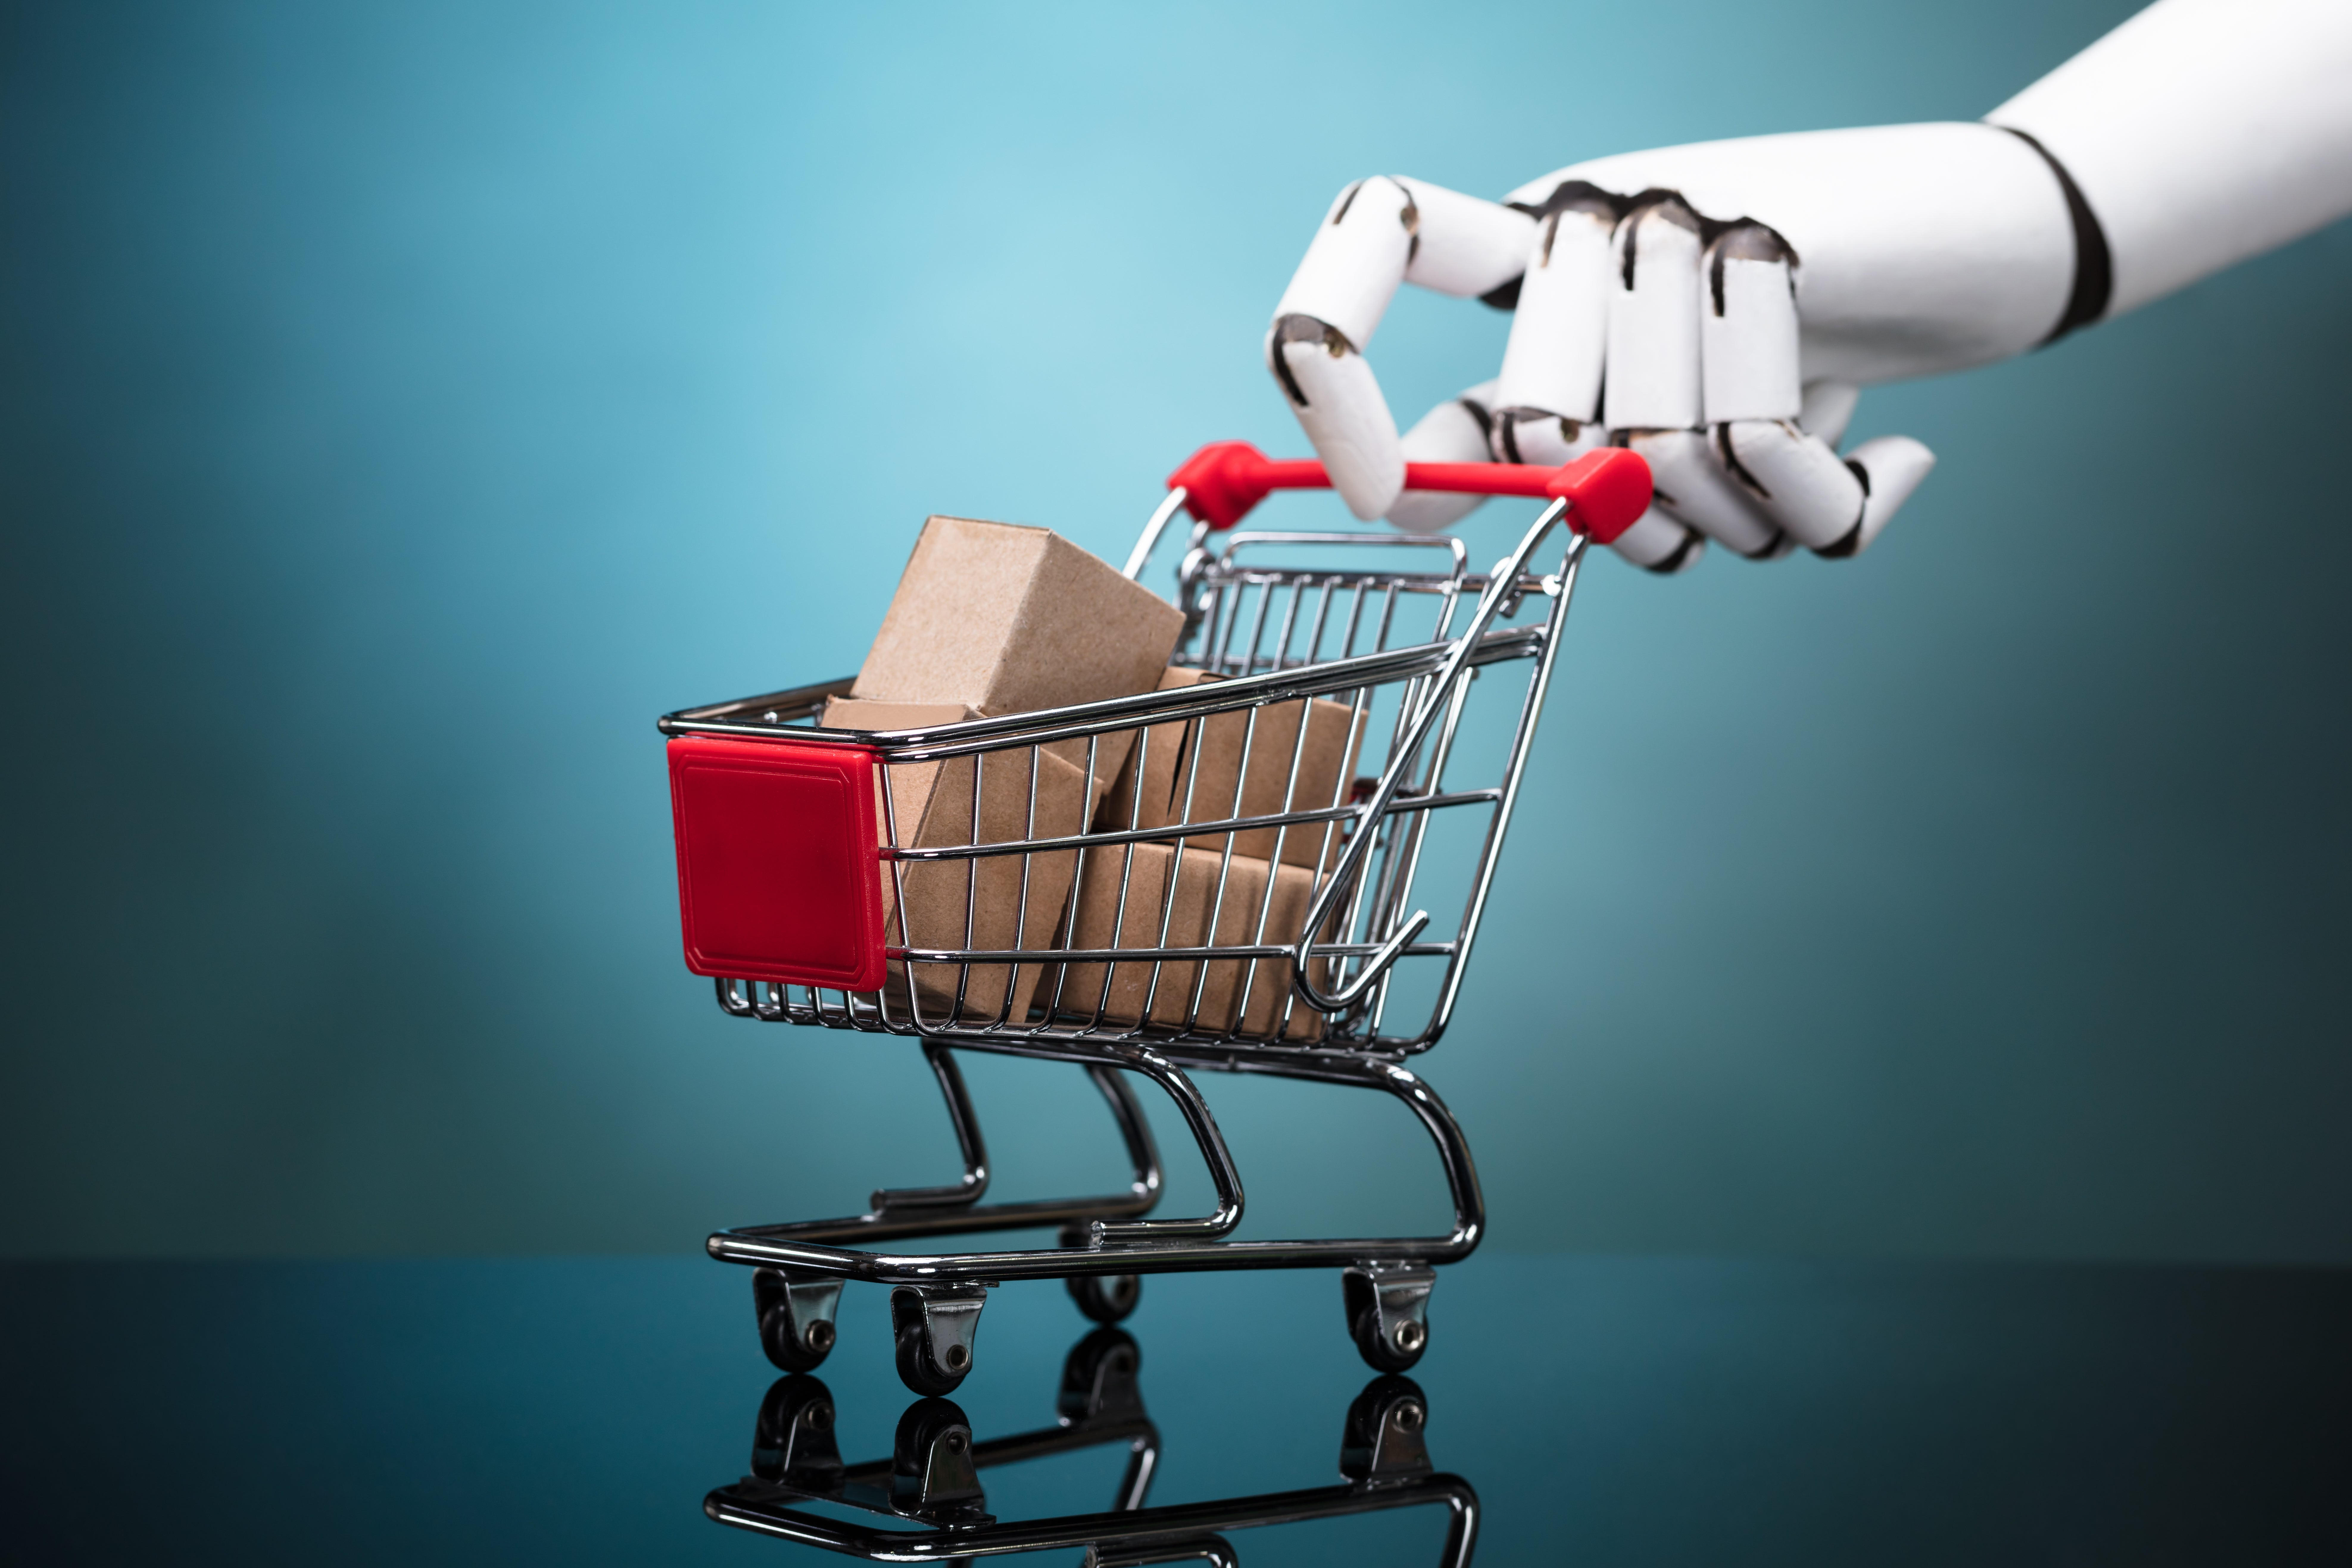 AI robot arm holding shopping cart